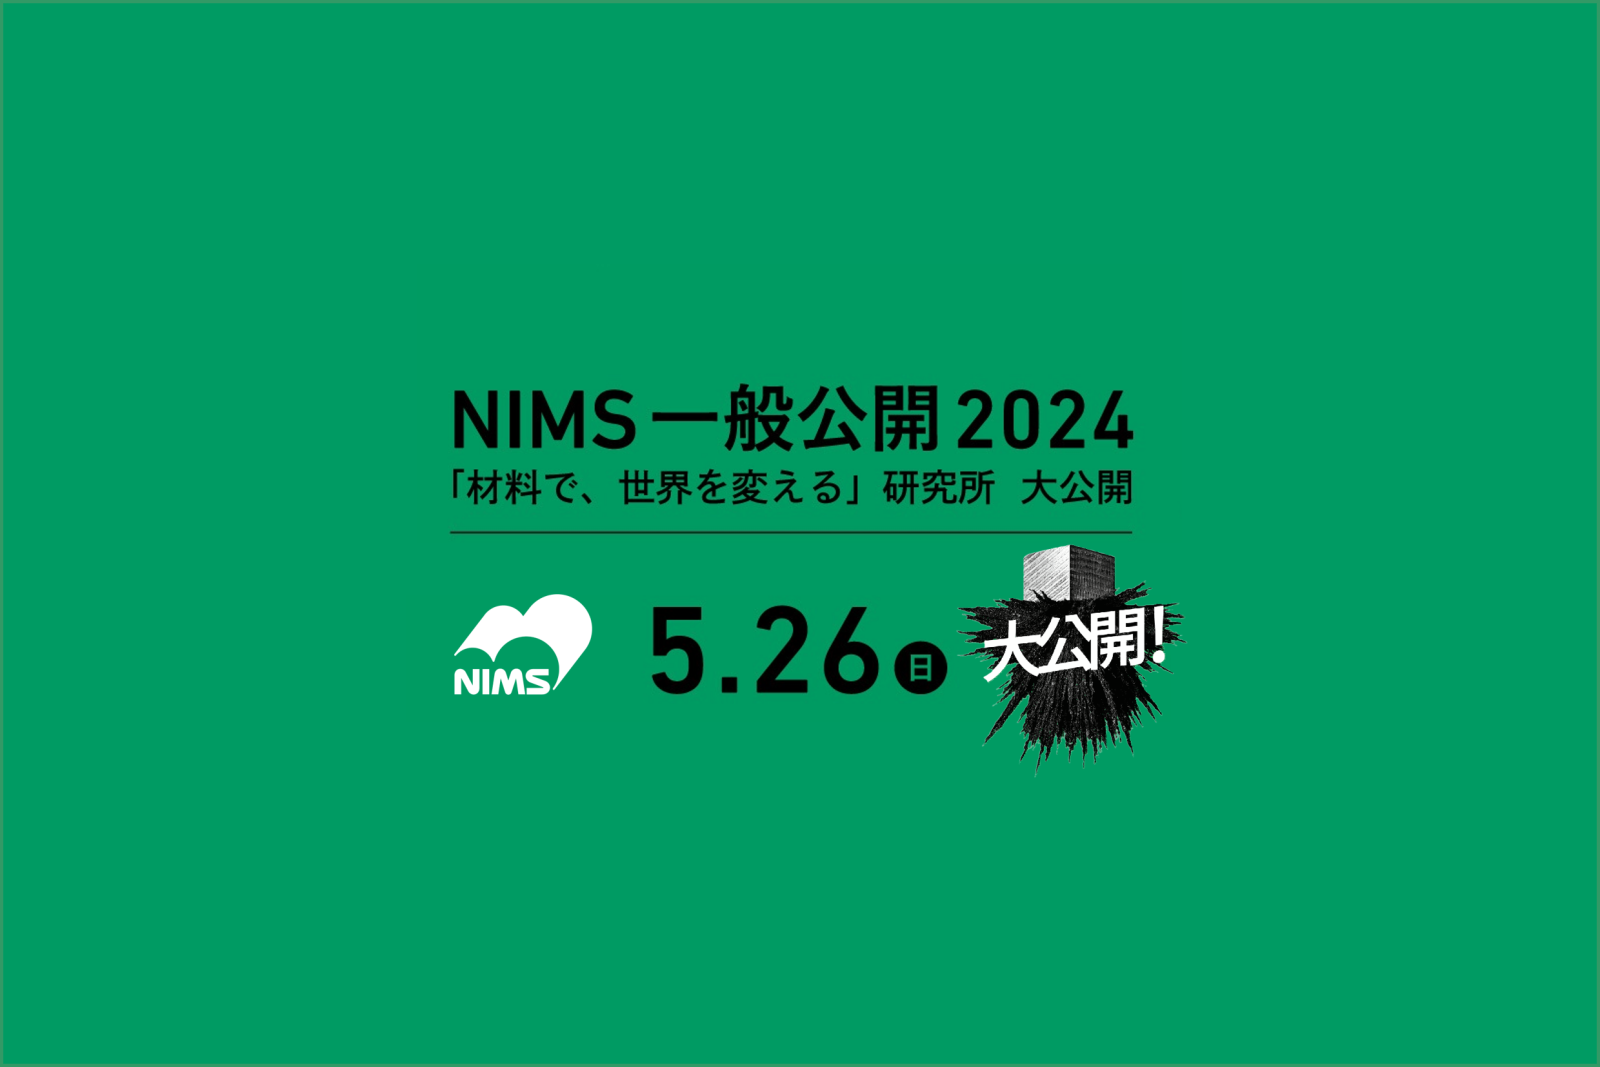 NIMS一般公開240526